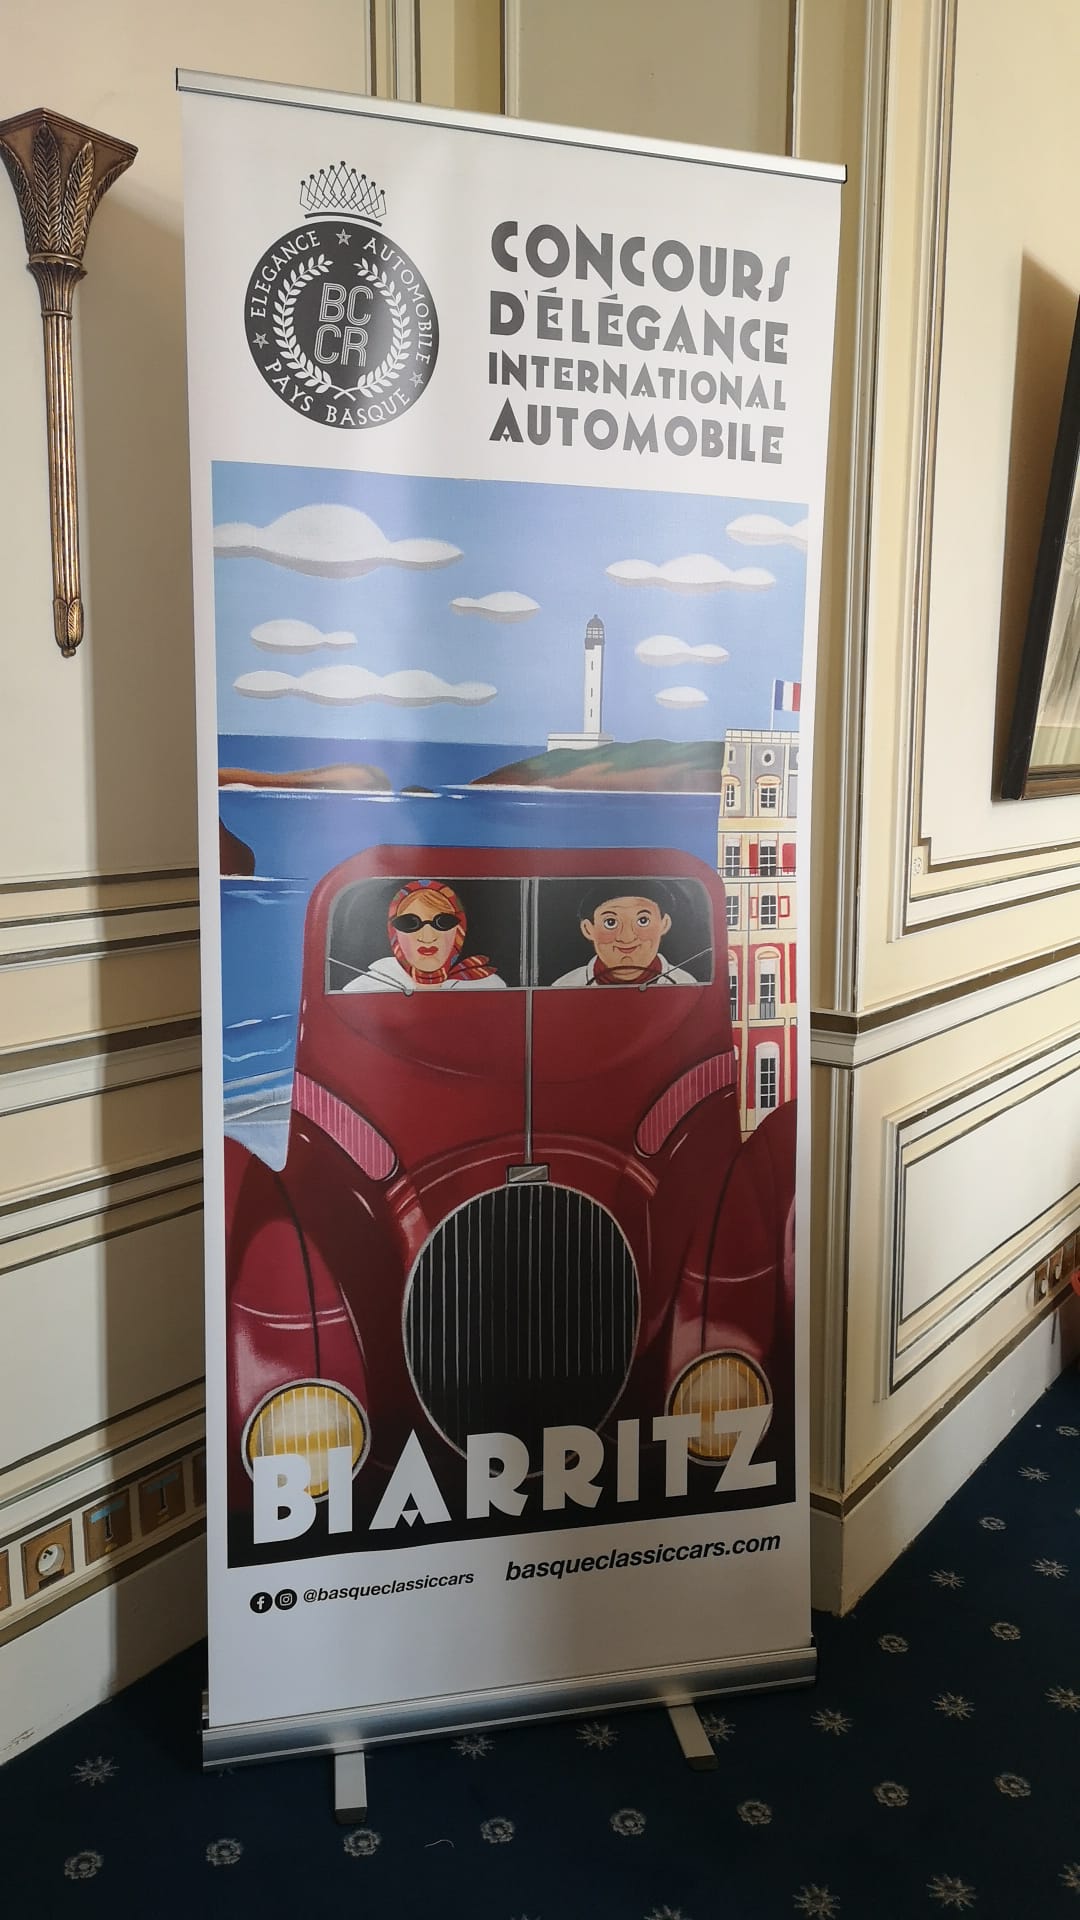 Biadrtiz_concourse_2021 Se viene: Concours d'Élégance International Automobile Biarritz - Semanal Clásico - Revista online de coches clásicos, de colección y sport